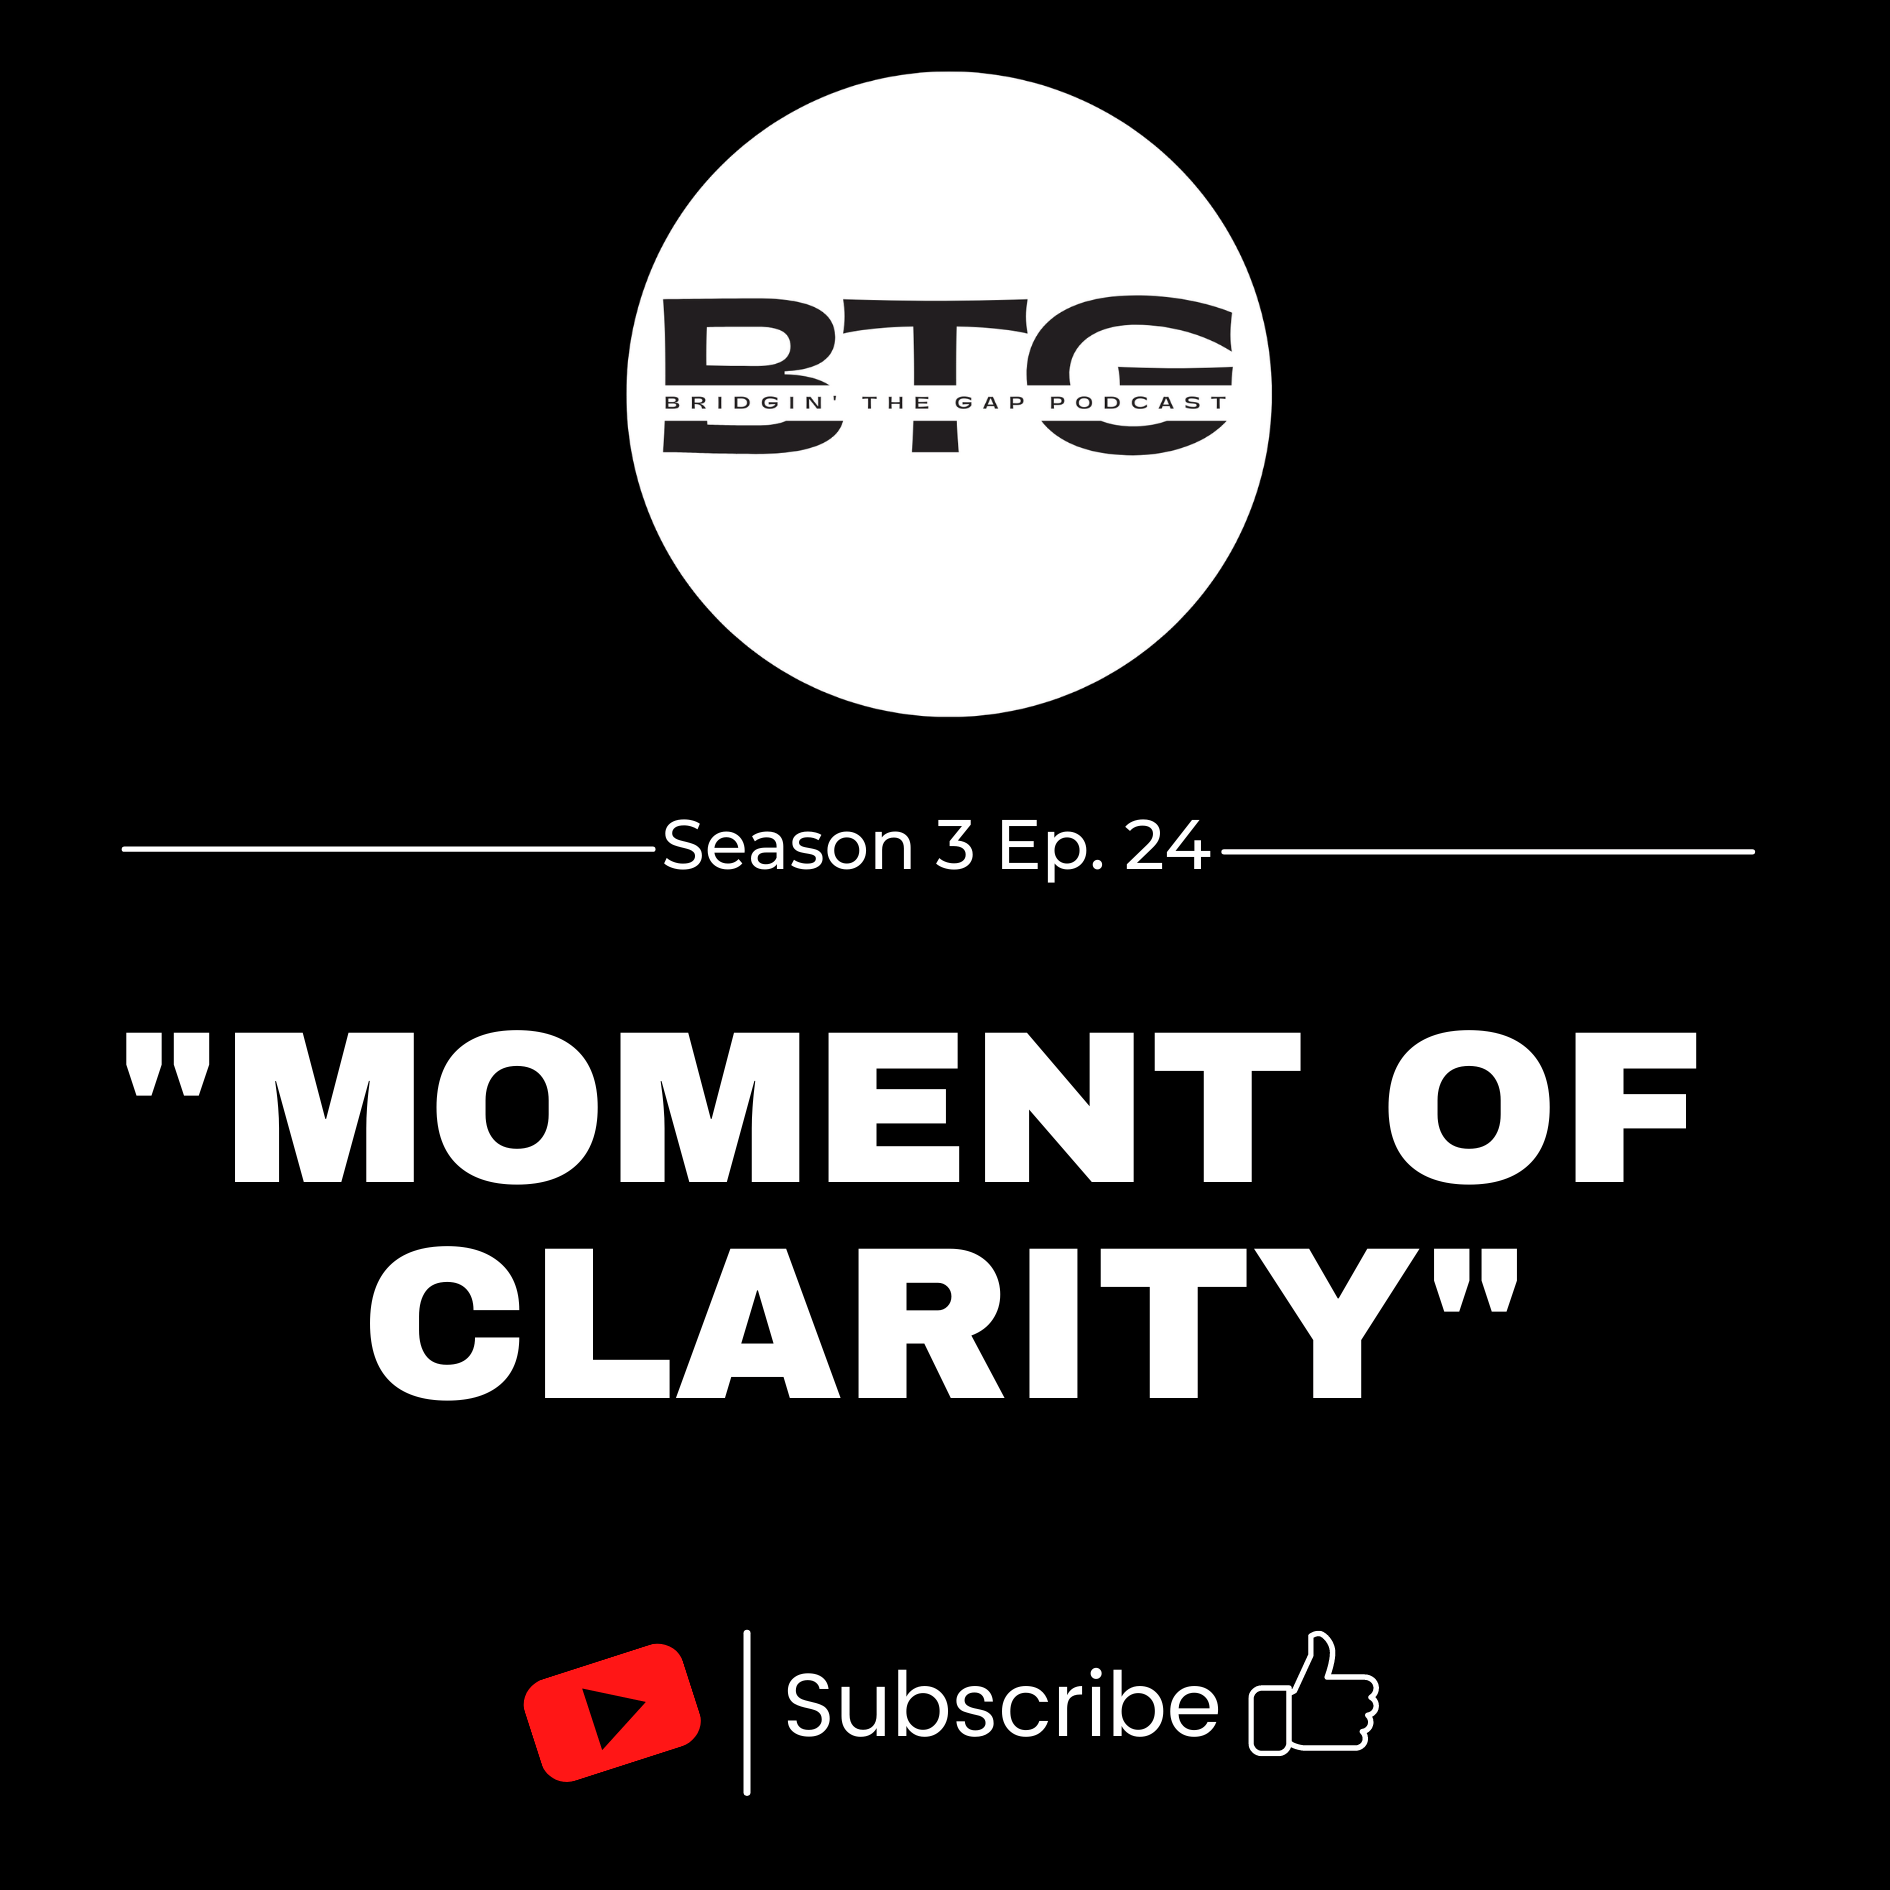 Bridgin' The Gap Podcast Season 3 Ep. 24 “Moment of Clarity”